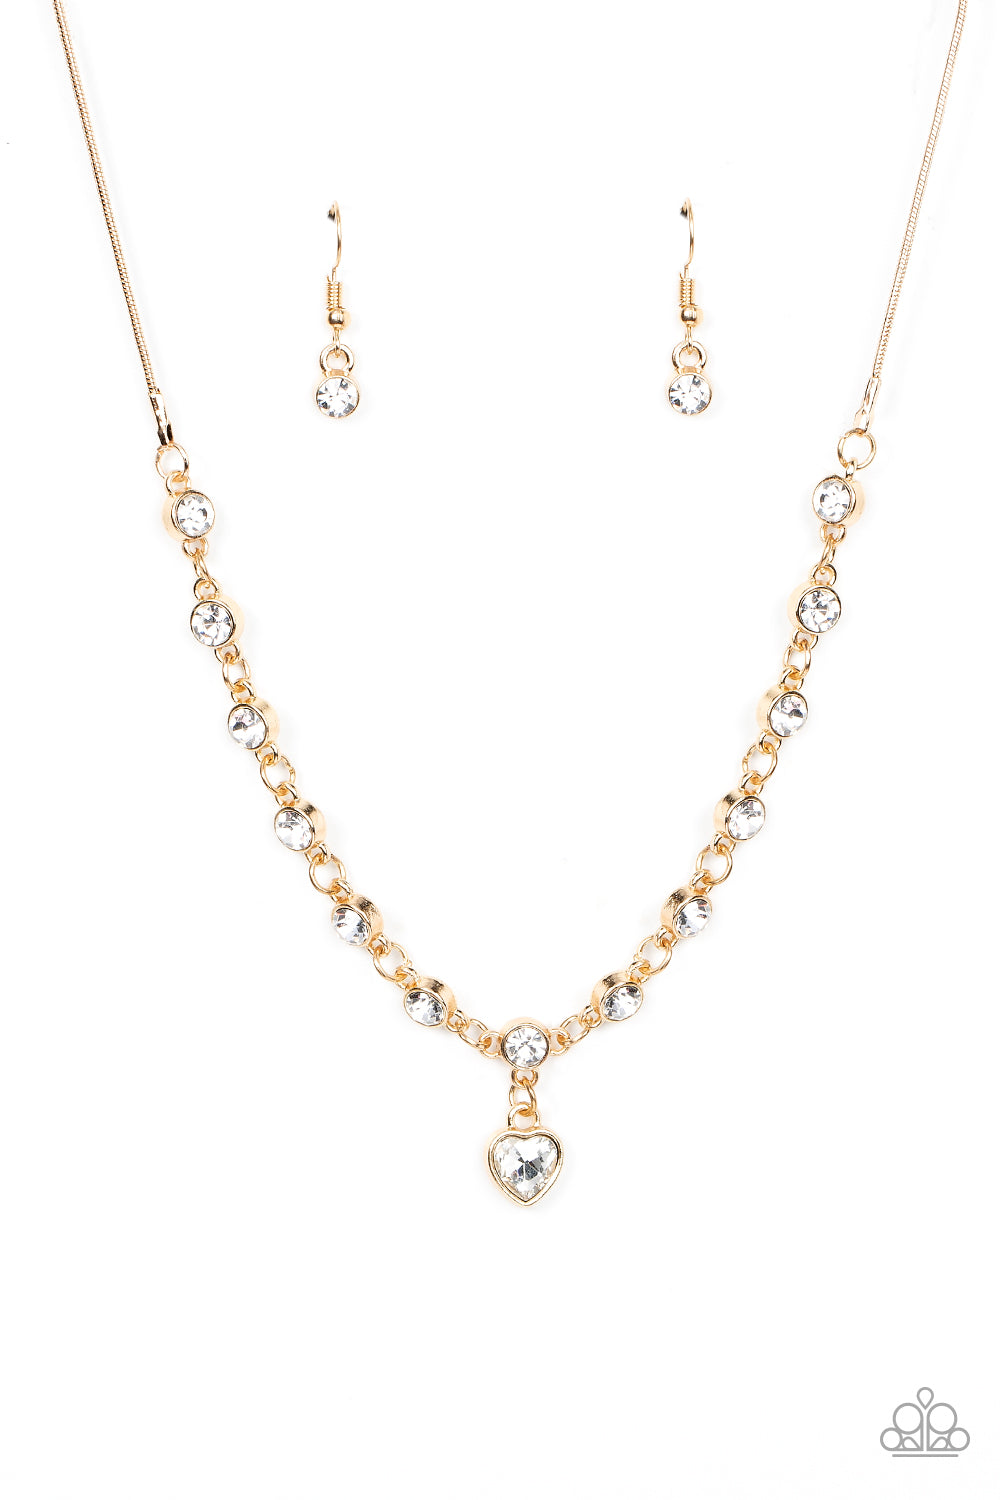 five-dollar-jewelry-true-love-trinket-gold-necklace-paparazzi-accessories